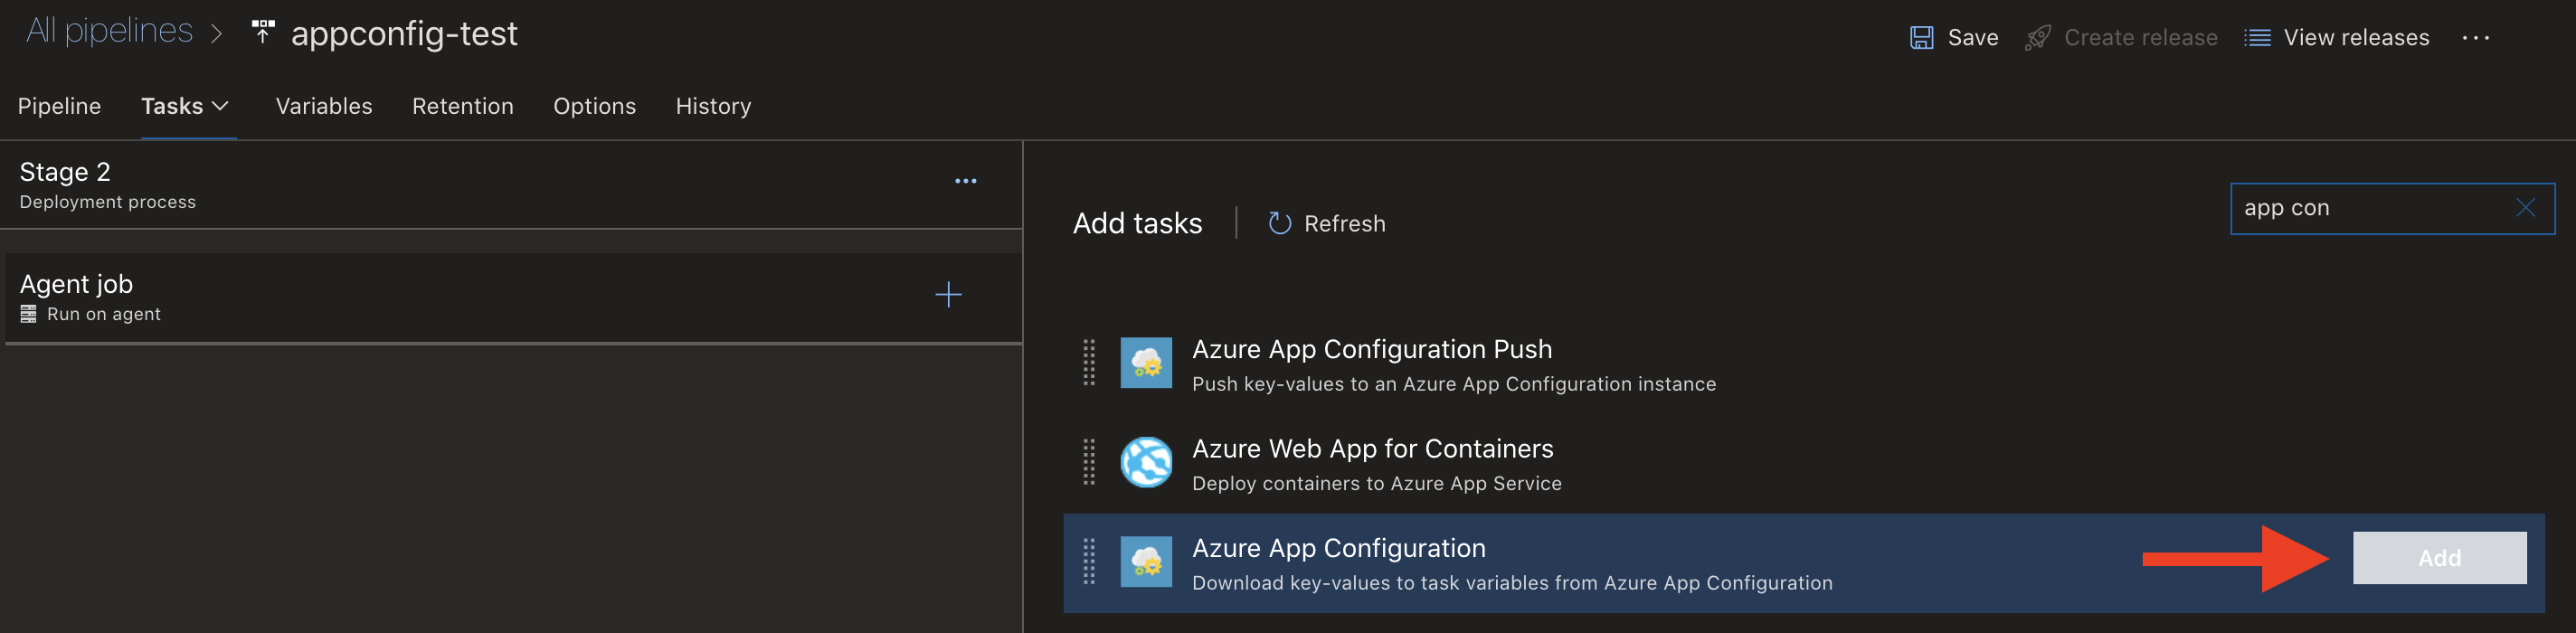 Azure App Configuration task in Azure DevOps